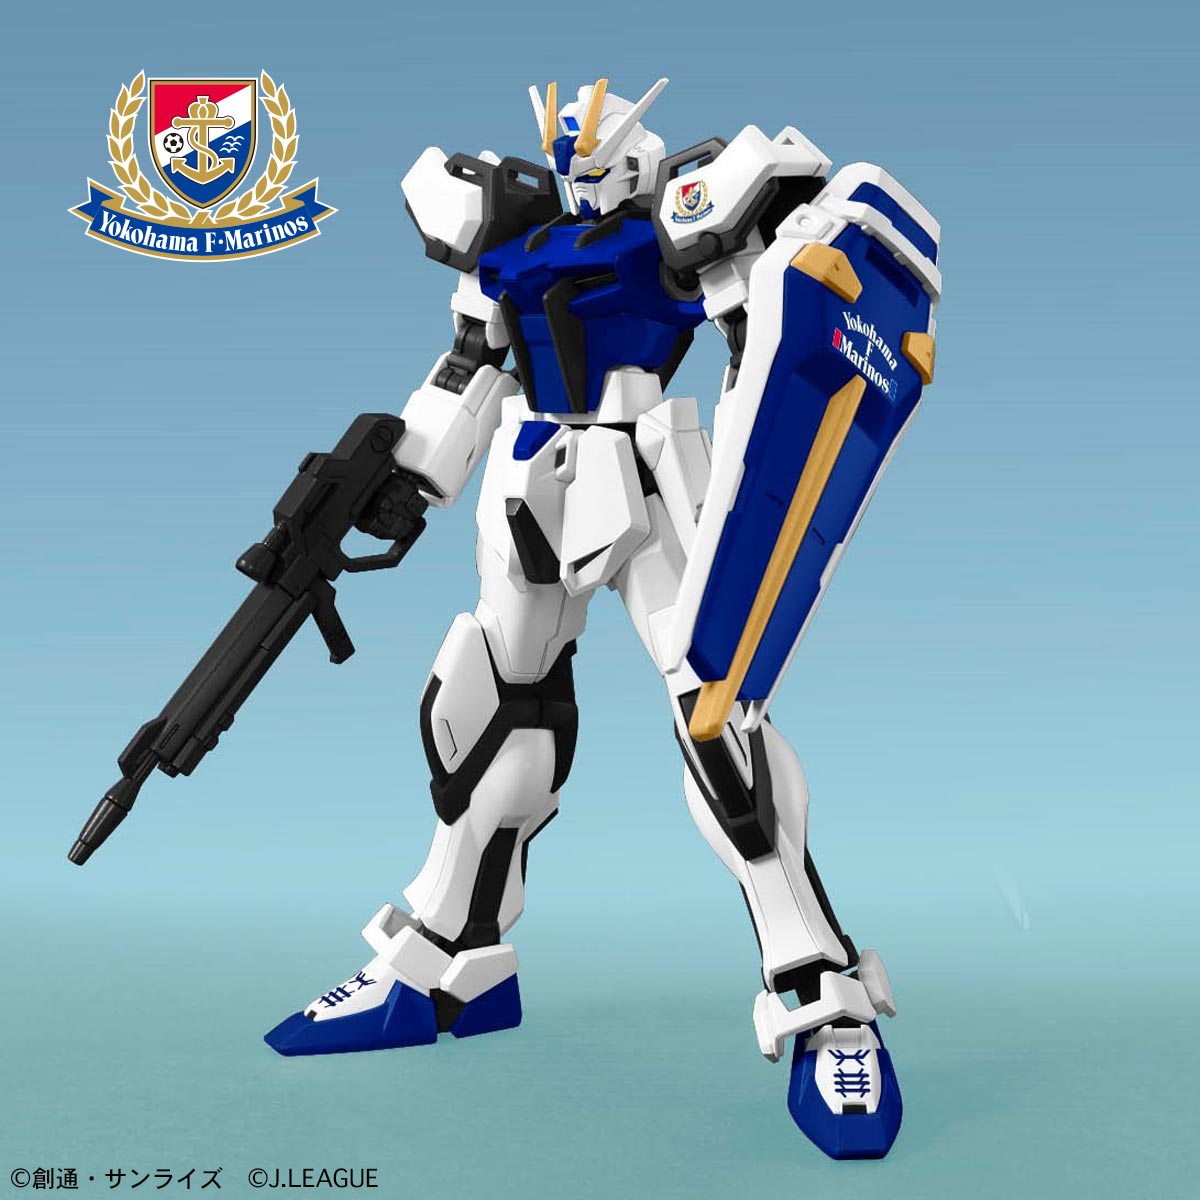 Gundam J.League 8